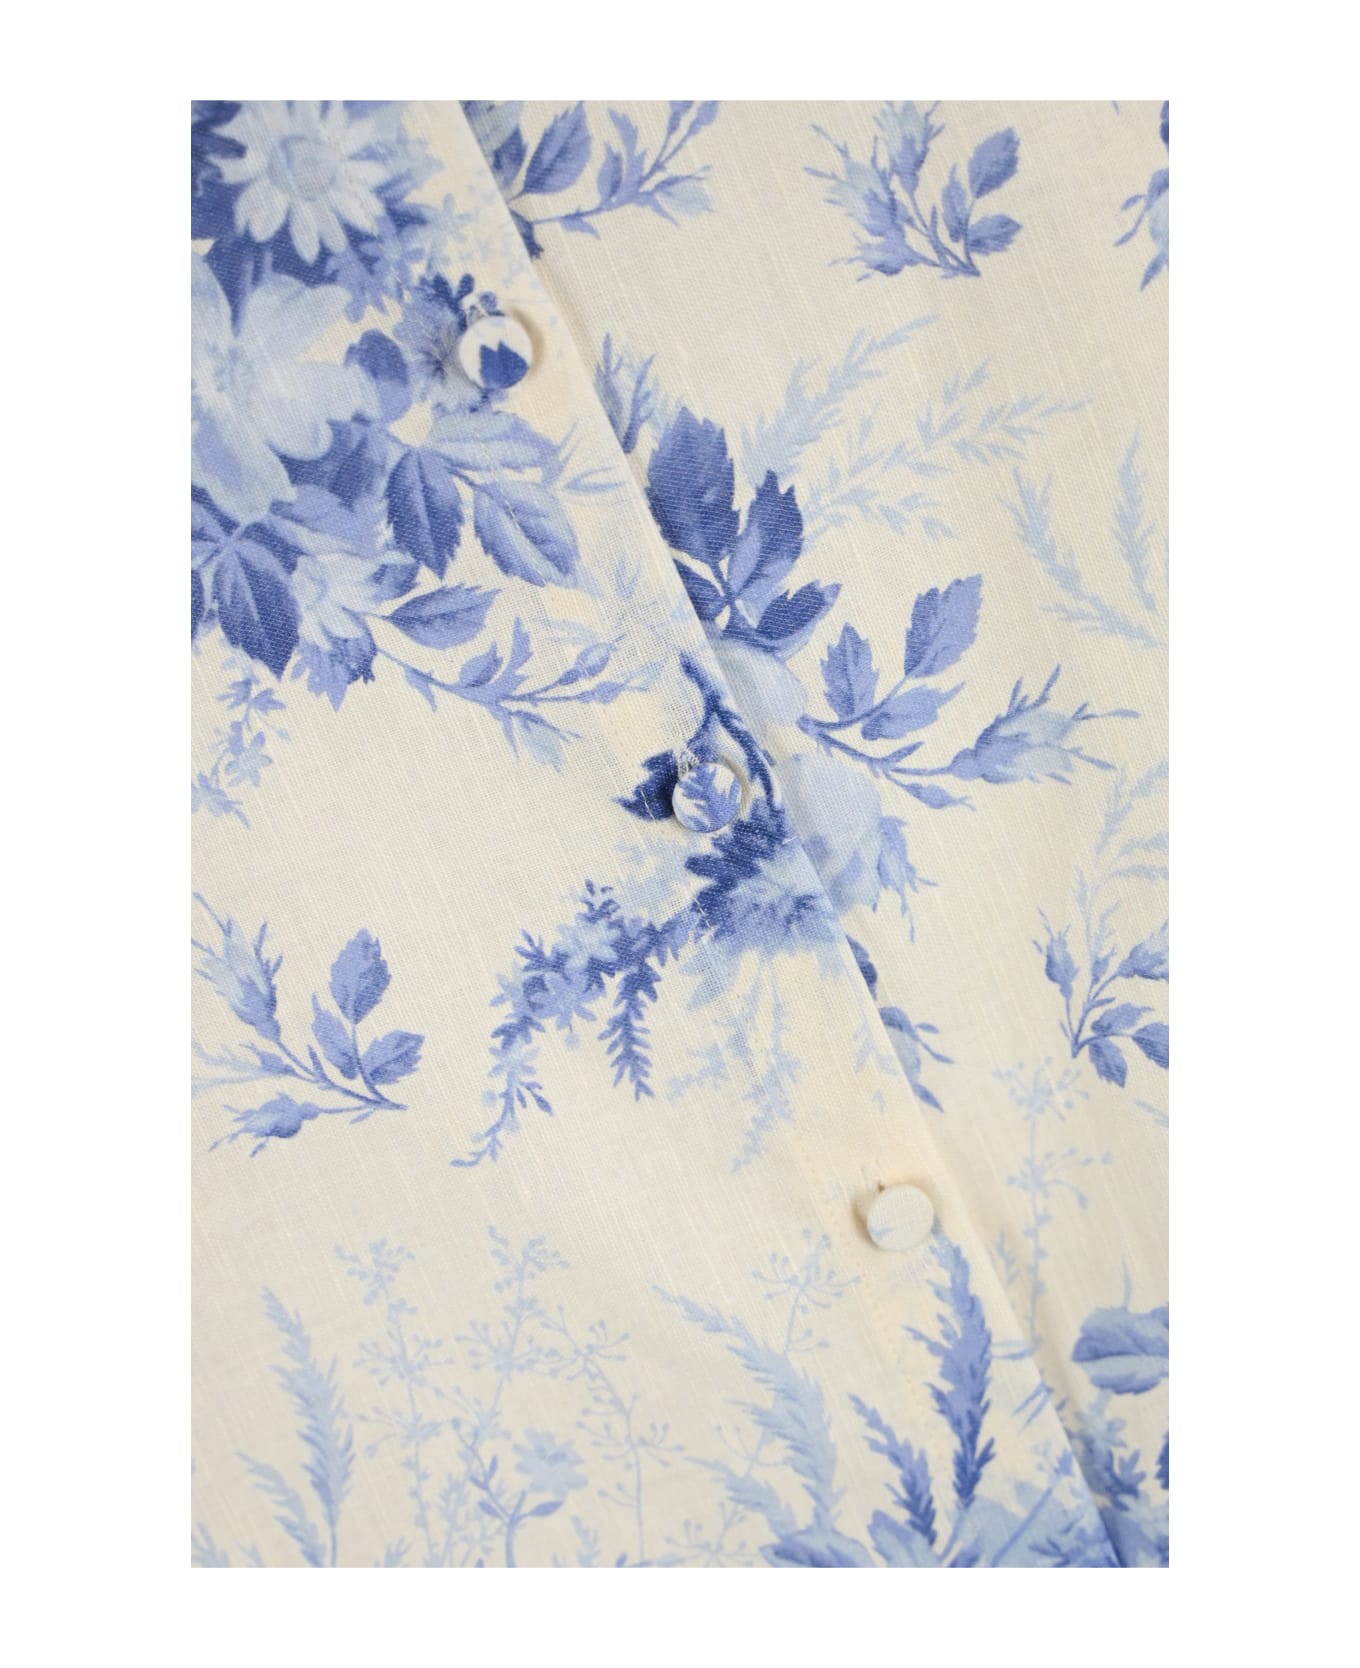 TwinSet Floral Print Linen Blend Shirt - Avorio/blue